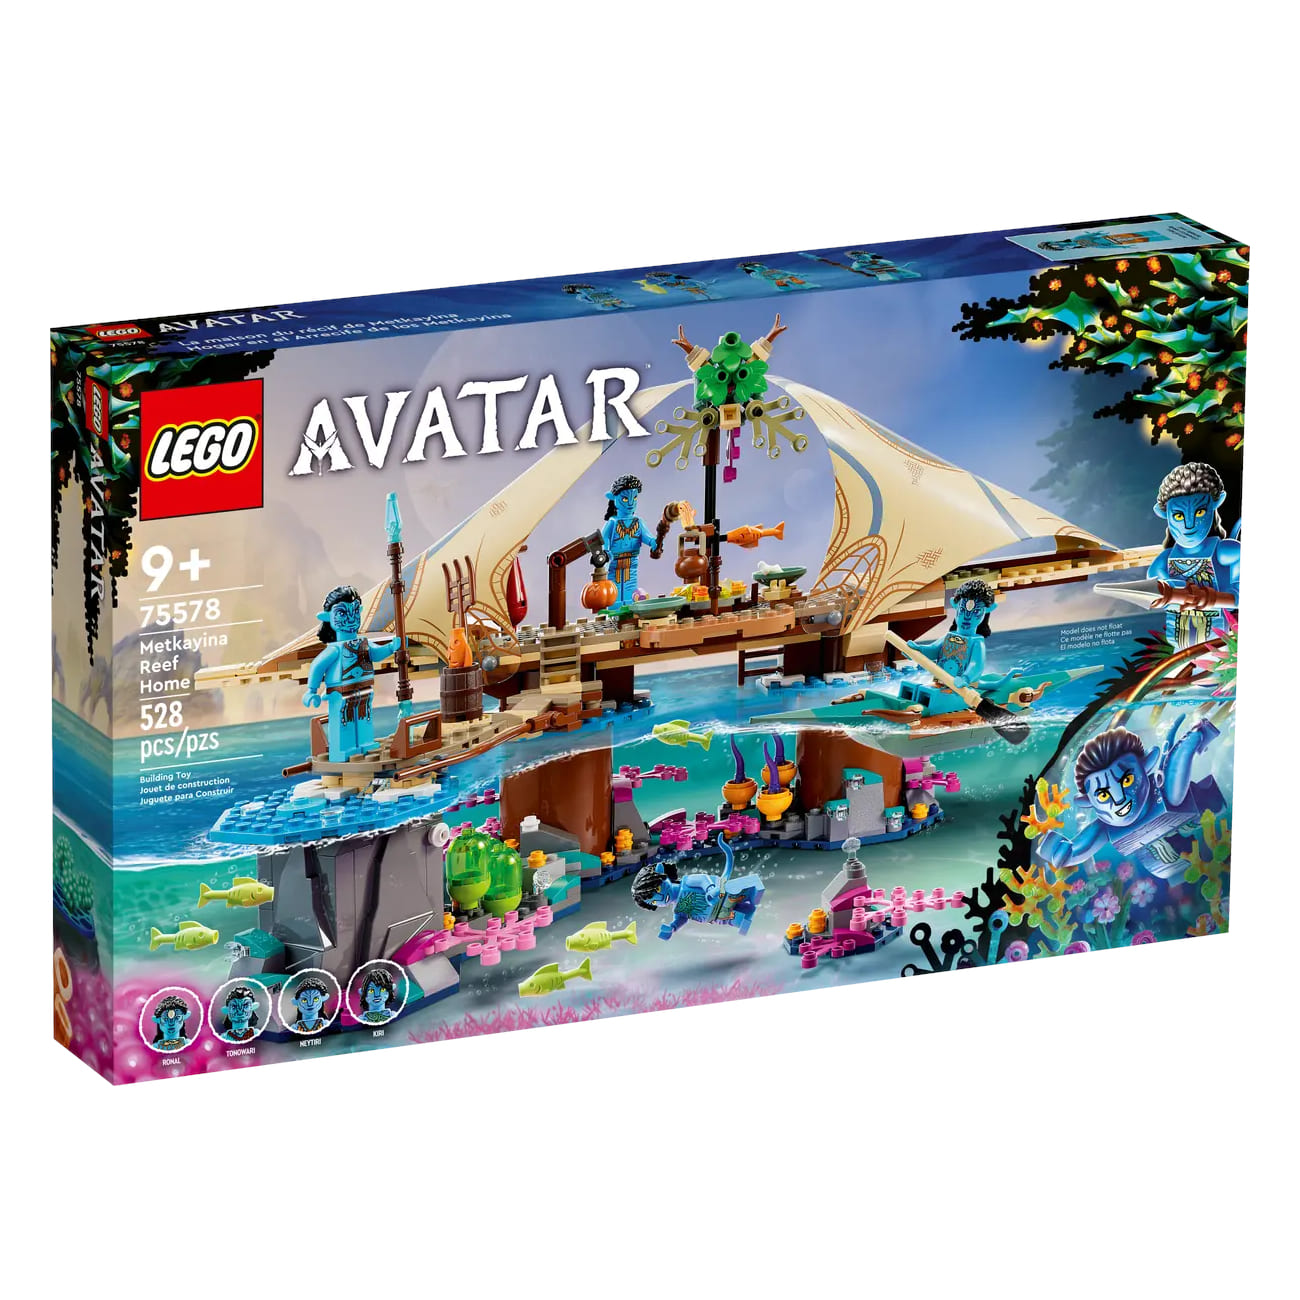 Конструктор LEGO Avatar Metkayina Reef Home 75578, 528 деталей lego 75578 avatar the reef of metkayina